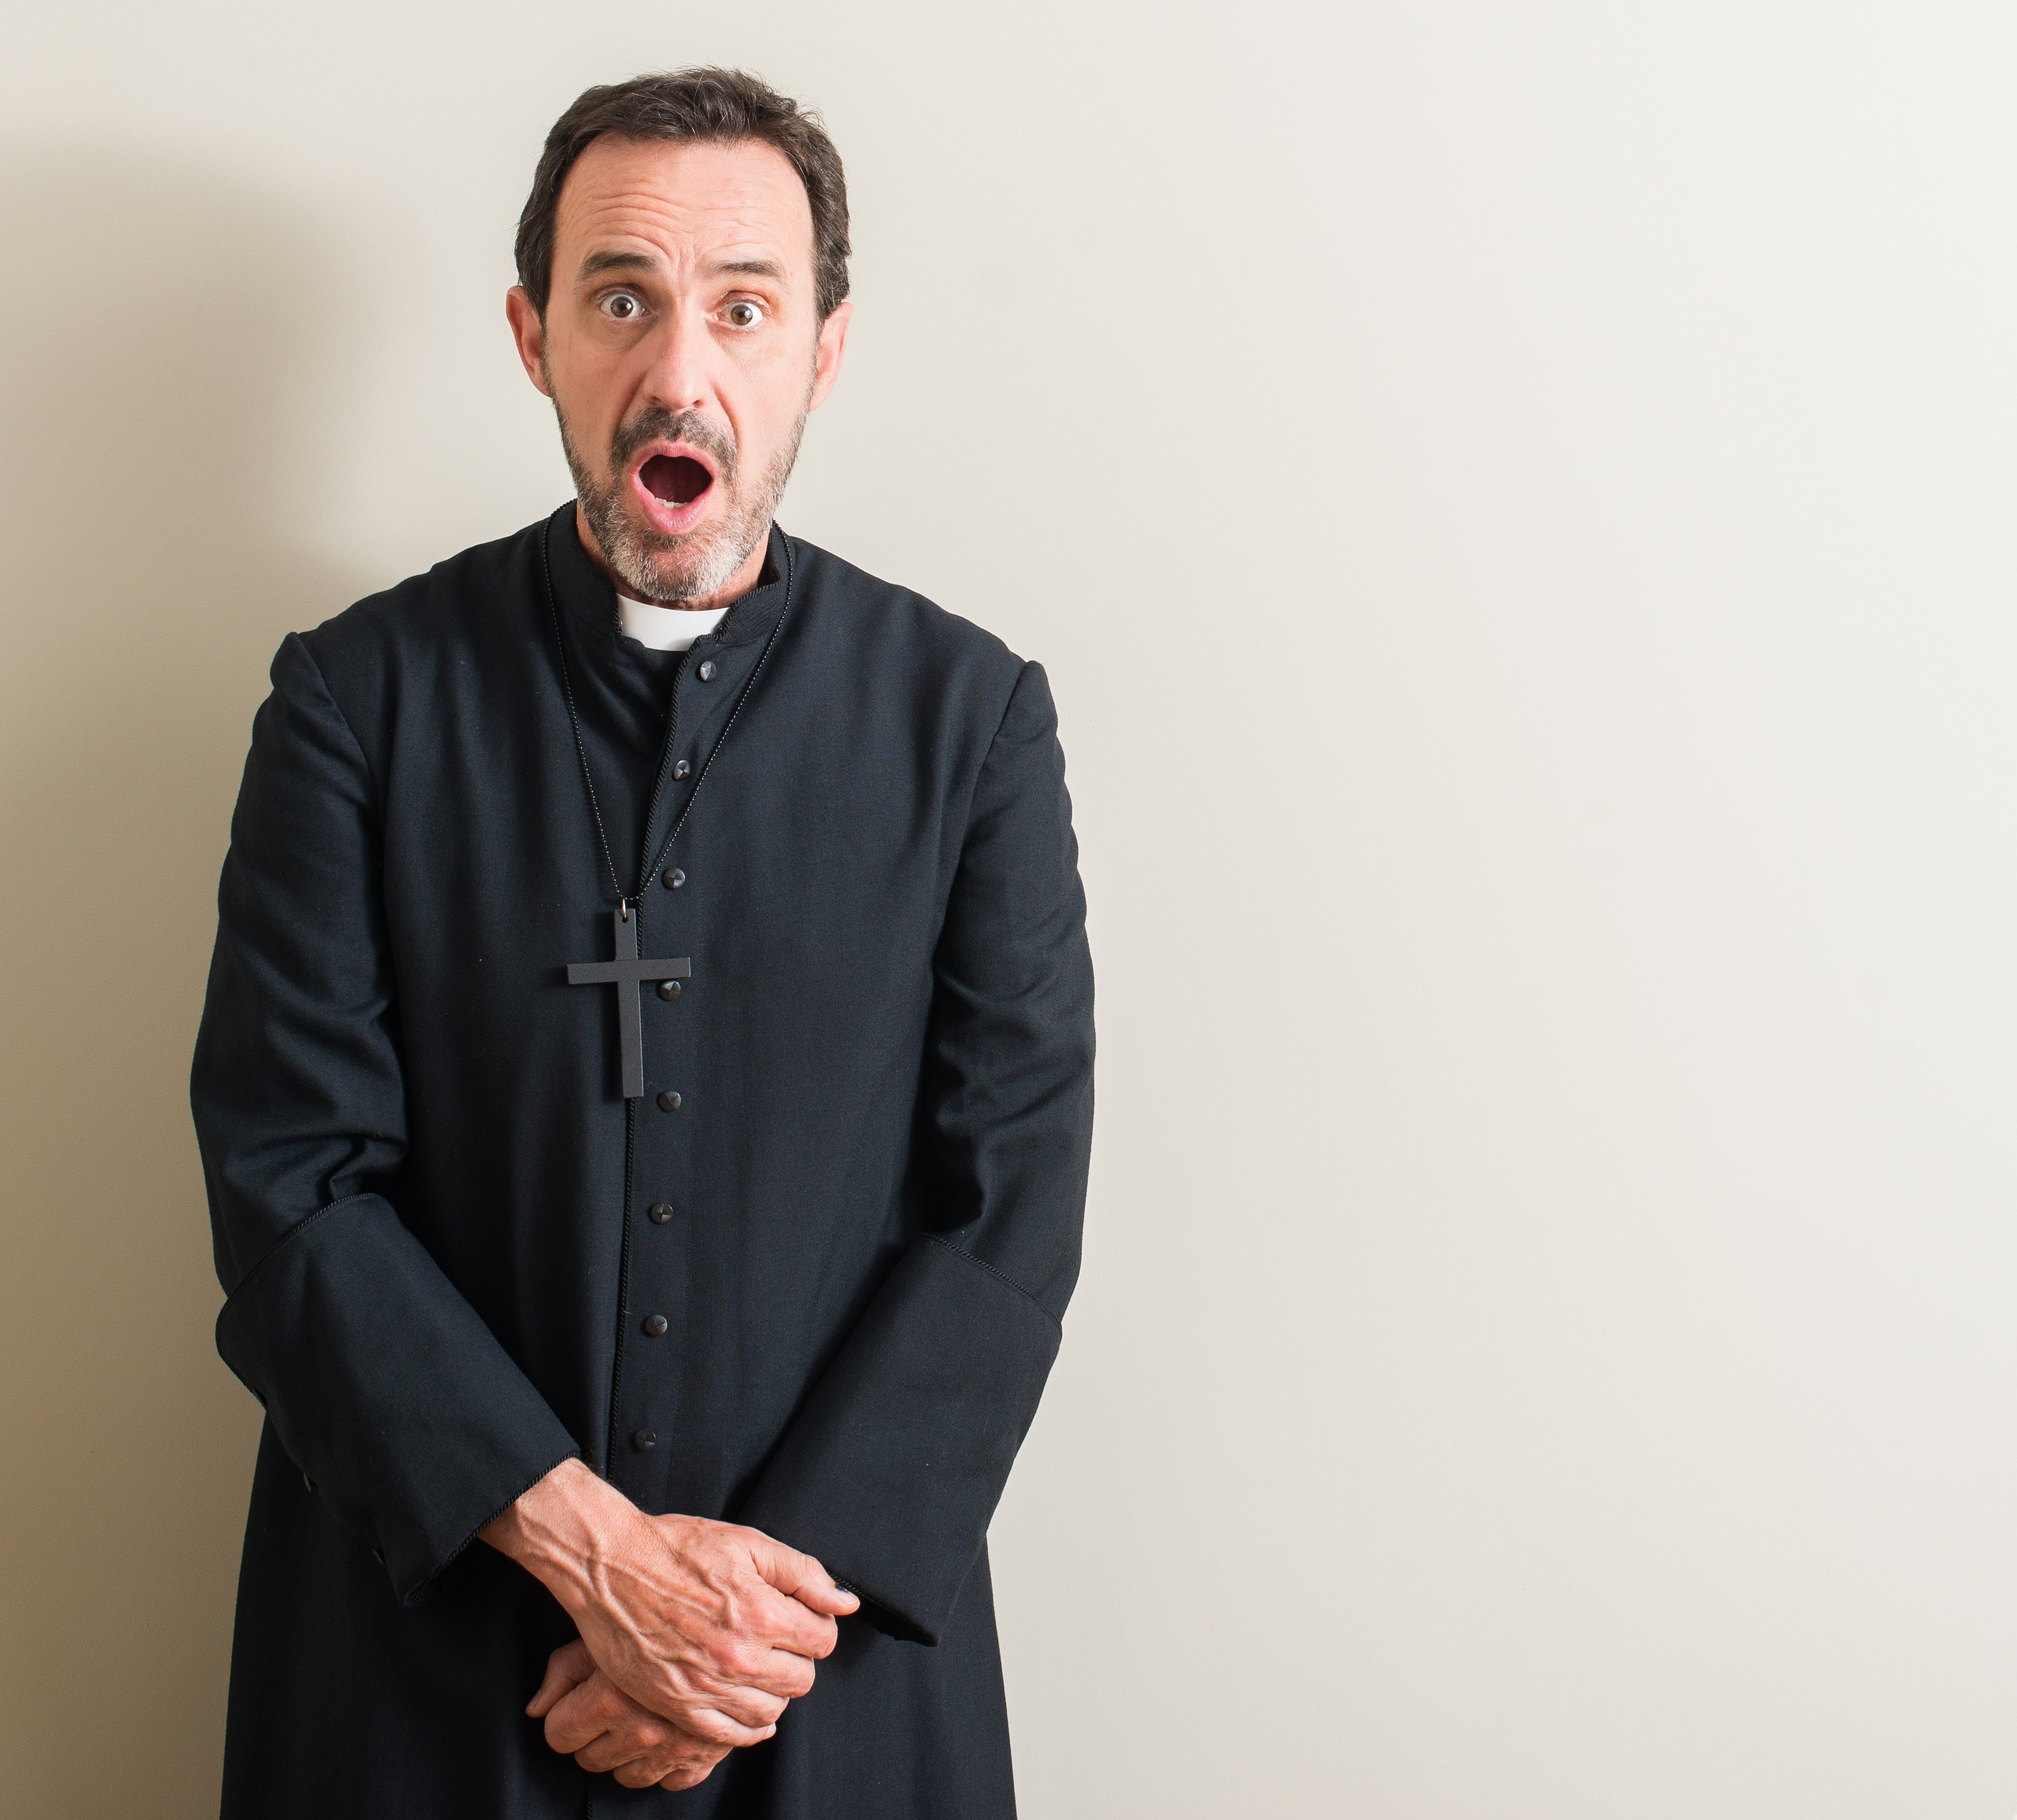 Church pastor looks shocked | Photo: Shutterstock